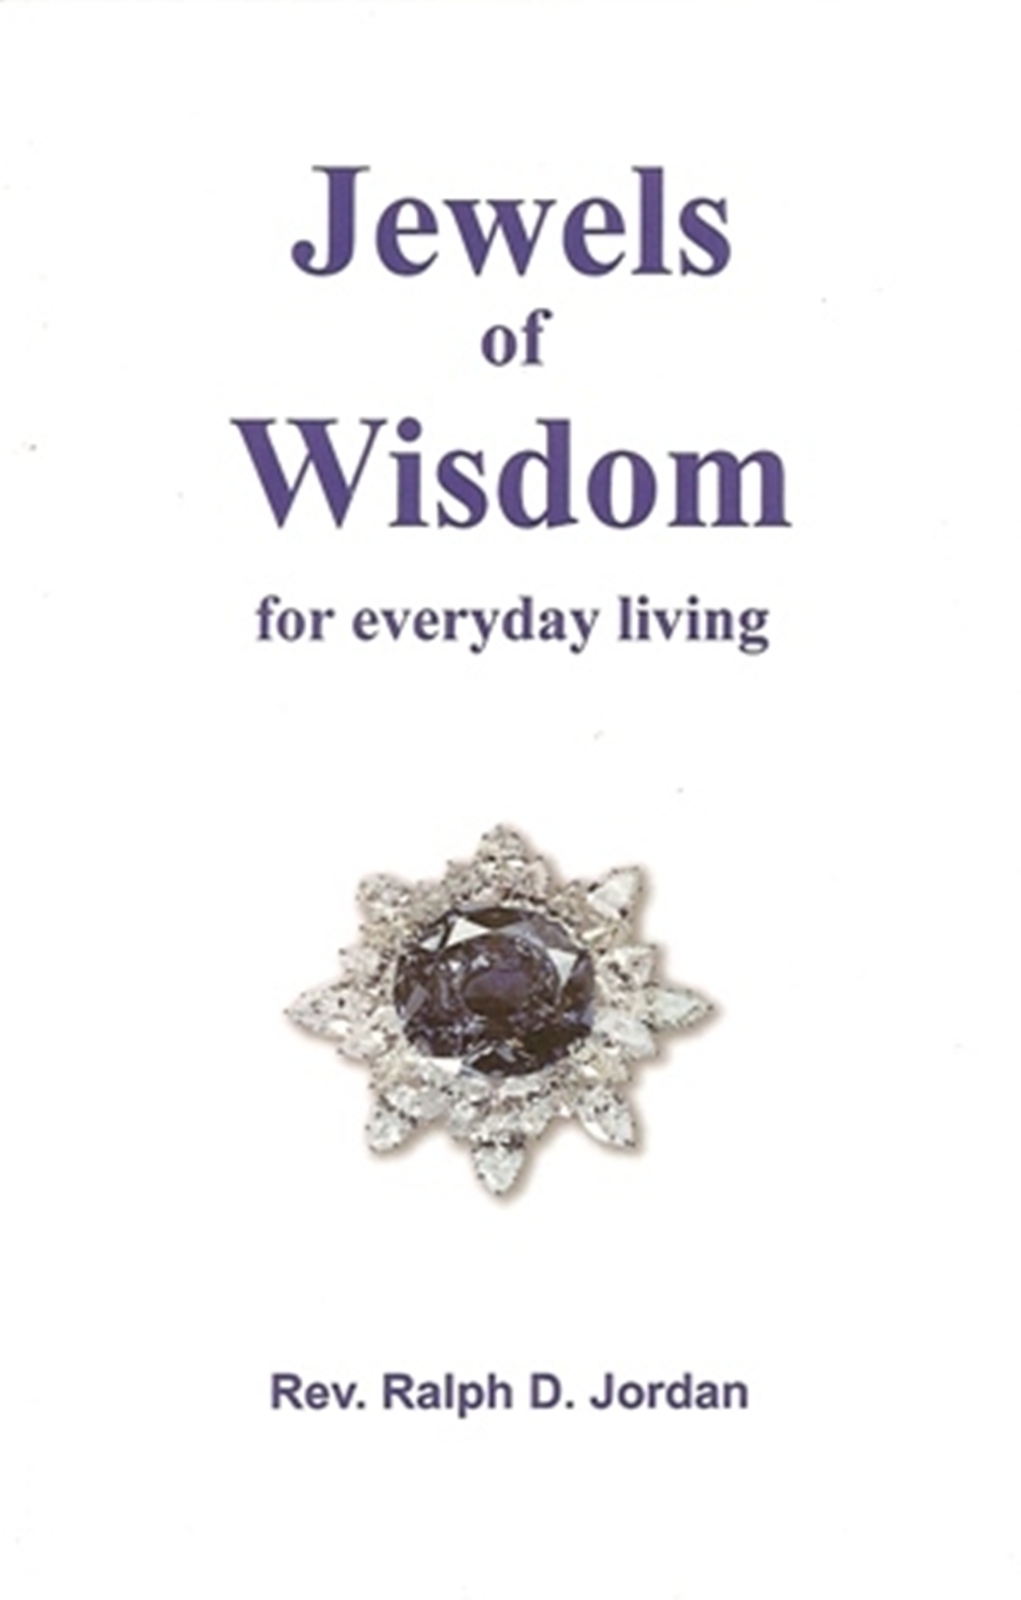 Jewels of Wisdom for everyday living, Rev. Ralph D. Jordan